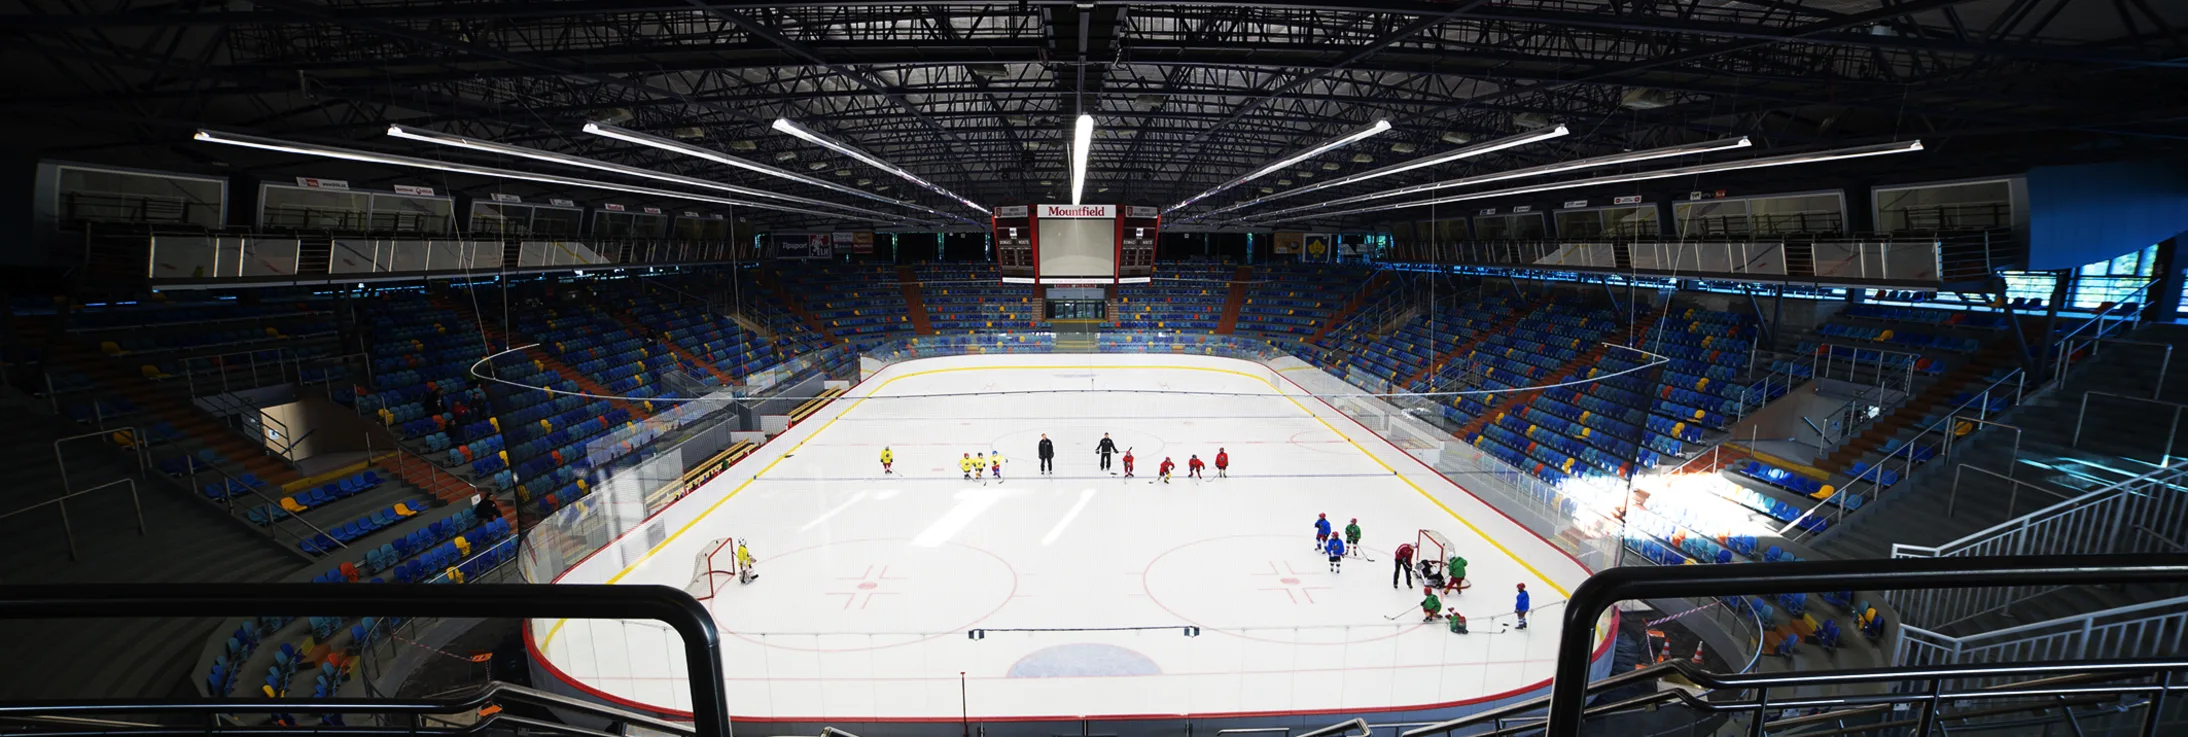 2002 IIHF World Junior Championship - Pardubice/Hradec Kralove